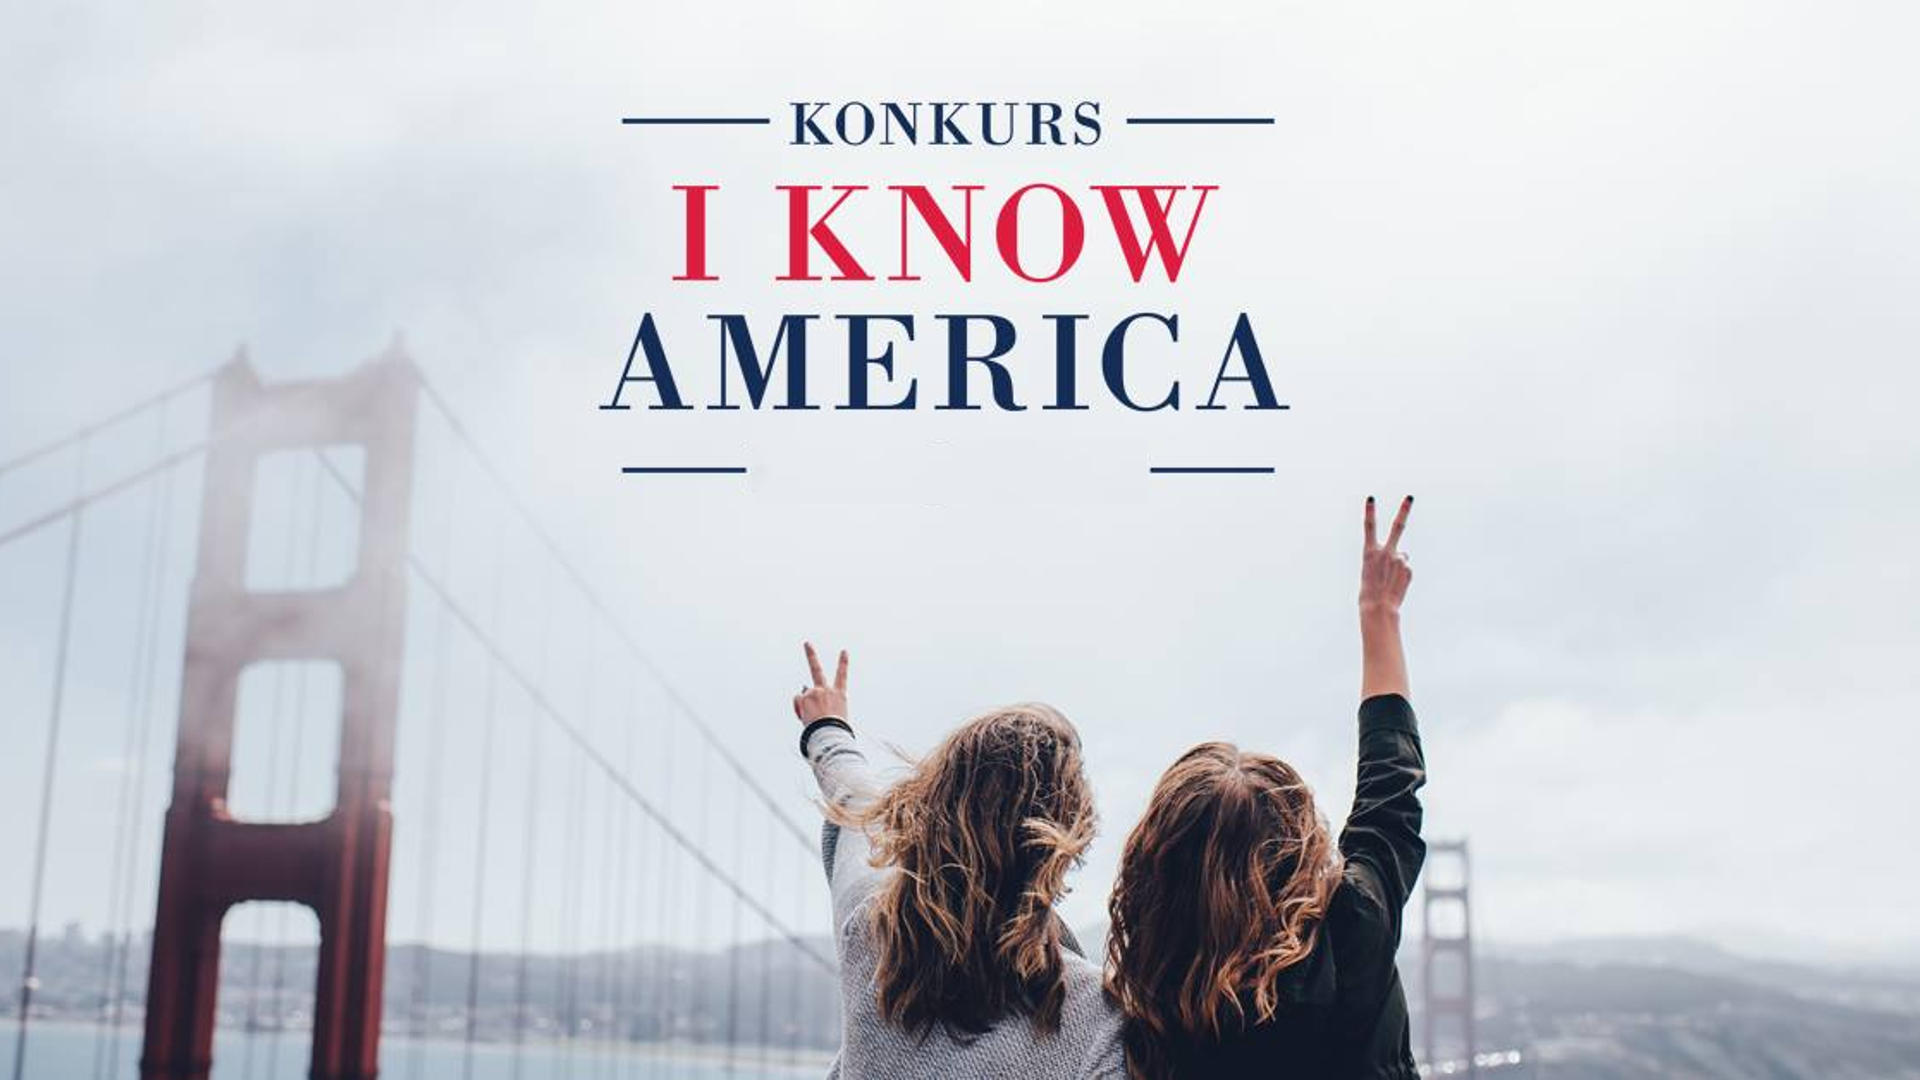 Konkurs "I know America"